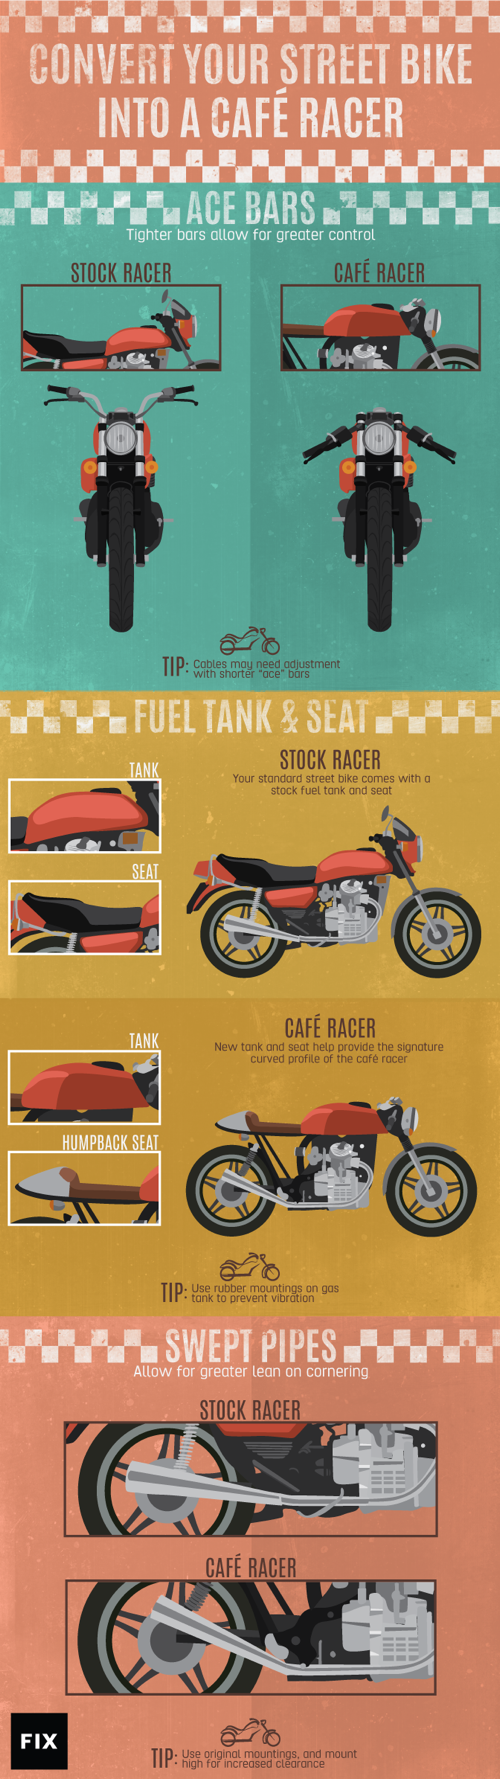 Convert Your Street Bike into a Café Racer infographic